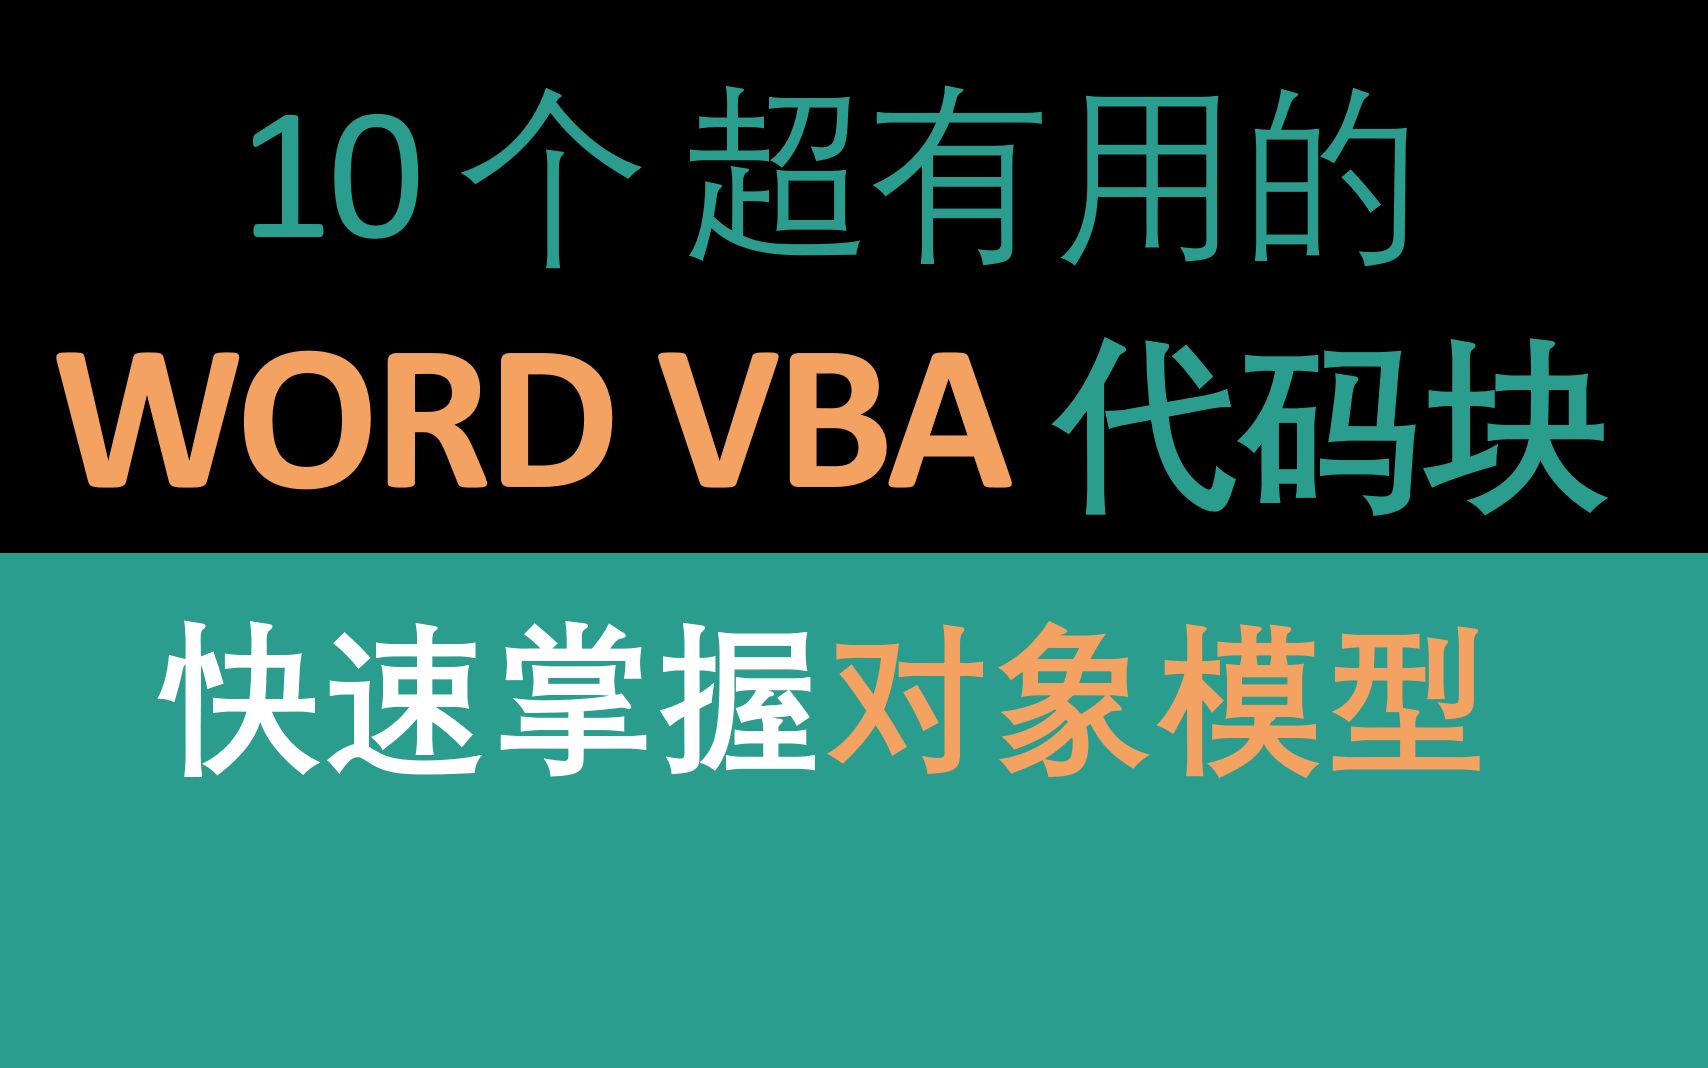 【Word VBA】 10个超有用的代码块